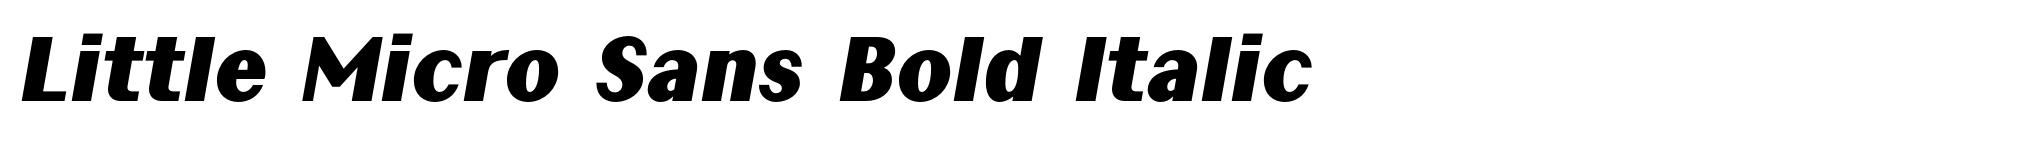 Little Micro Sans Bold Italic image